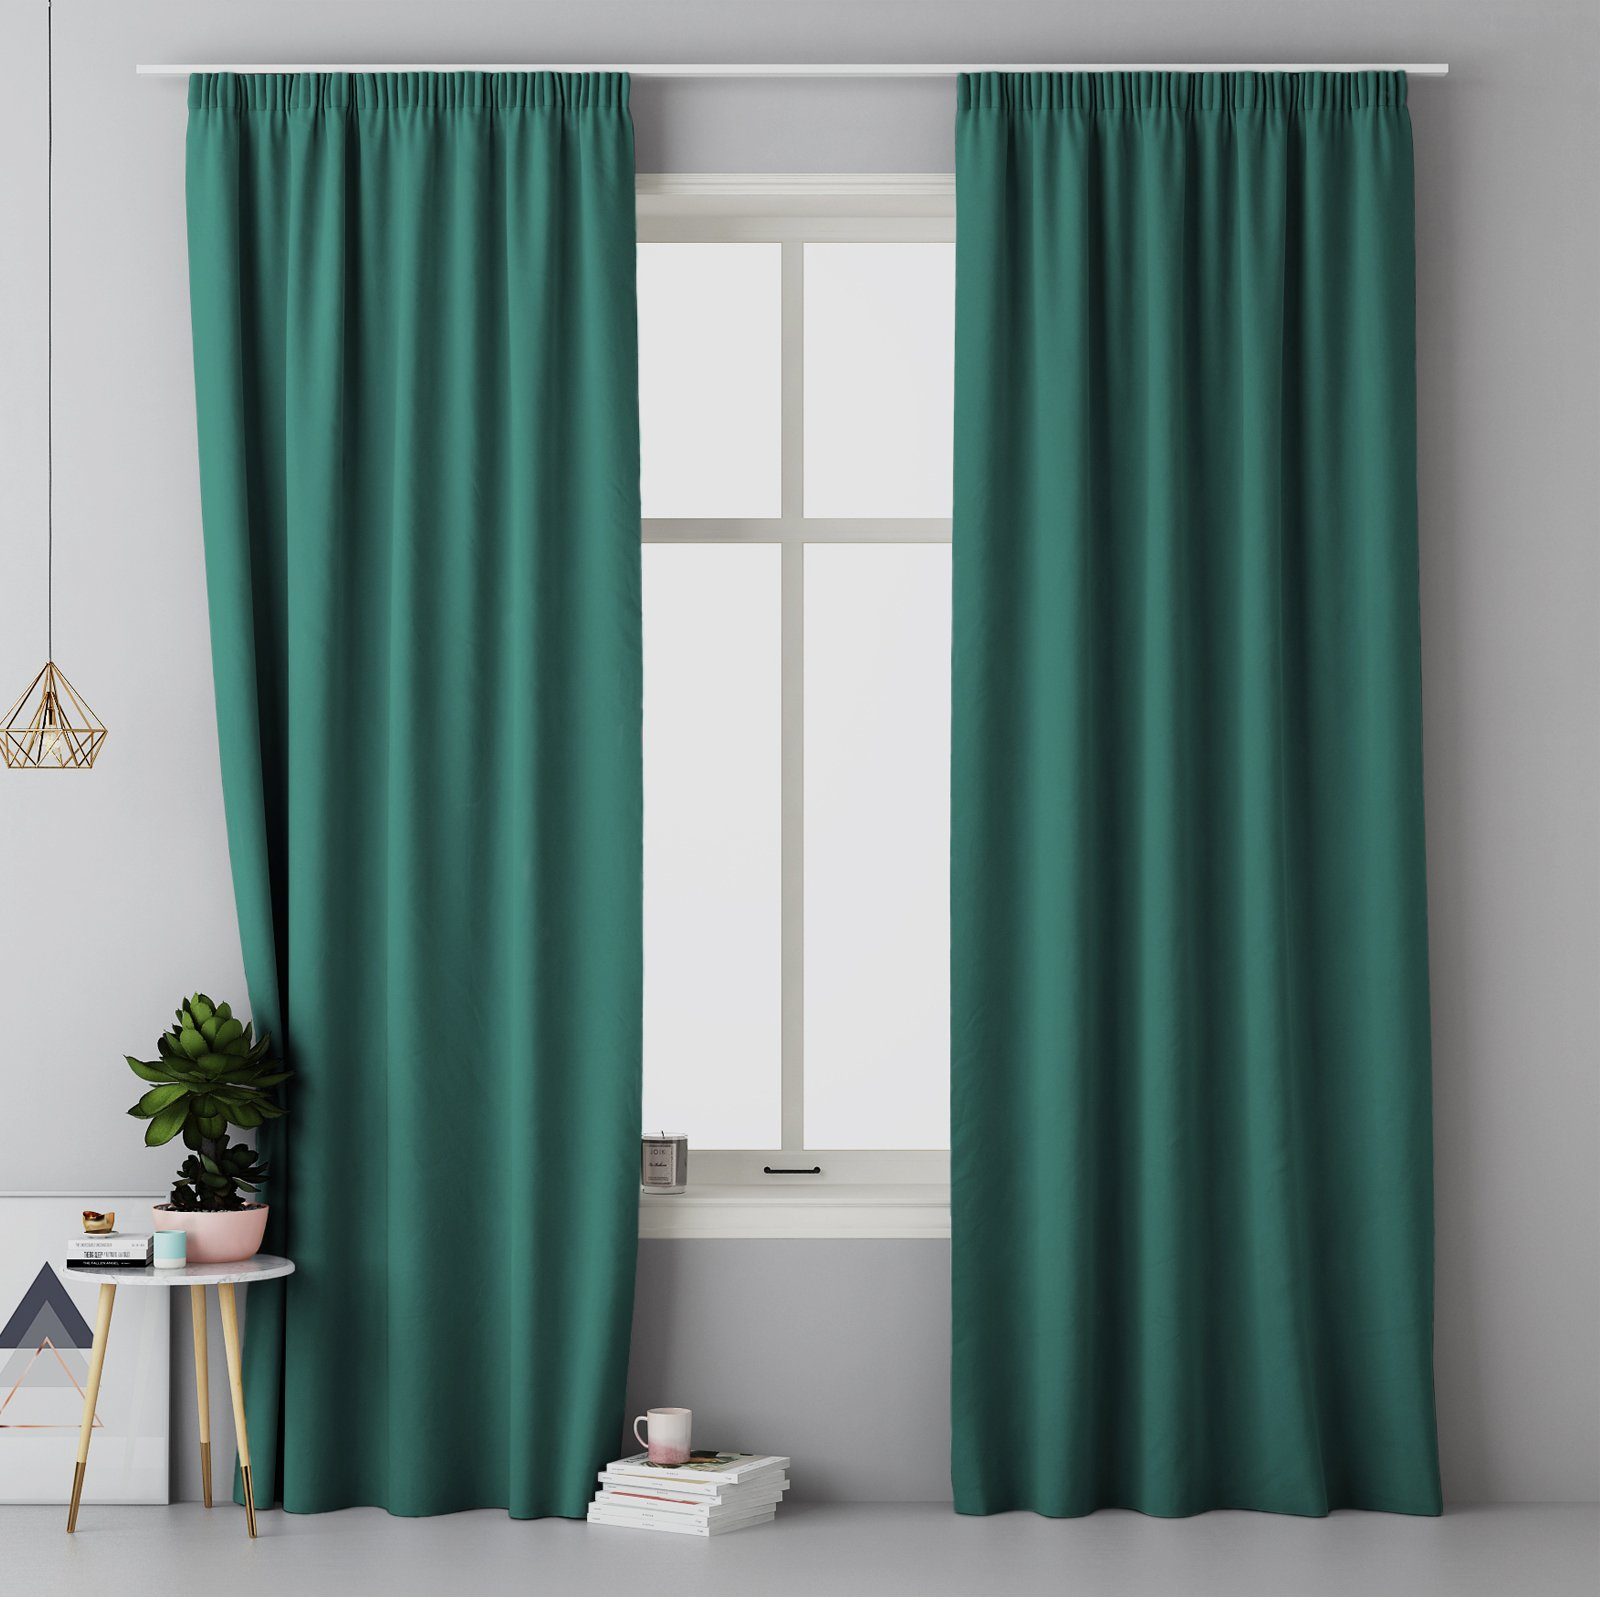 Vorhang Blickdichter Vorhang 140x250cm, grün, (1 Polyester, St) Kräuselband, JEMIDI